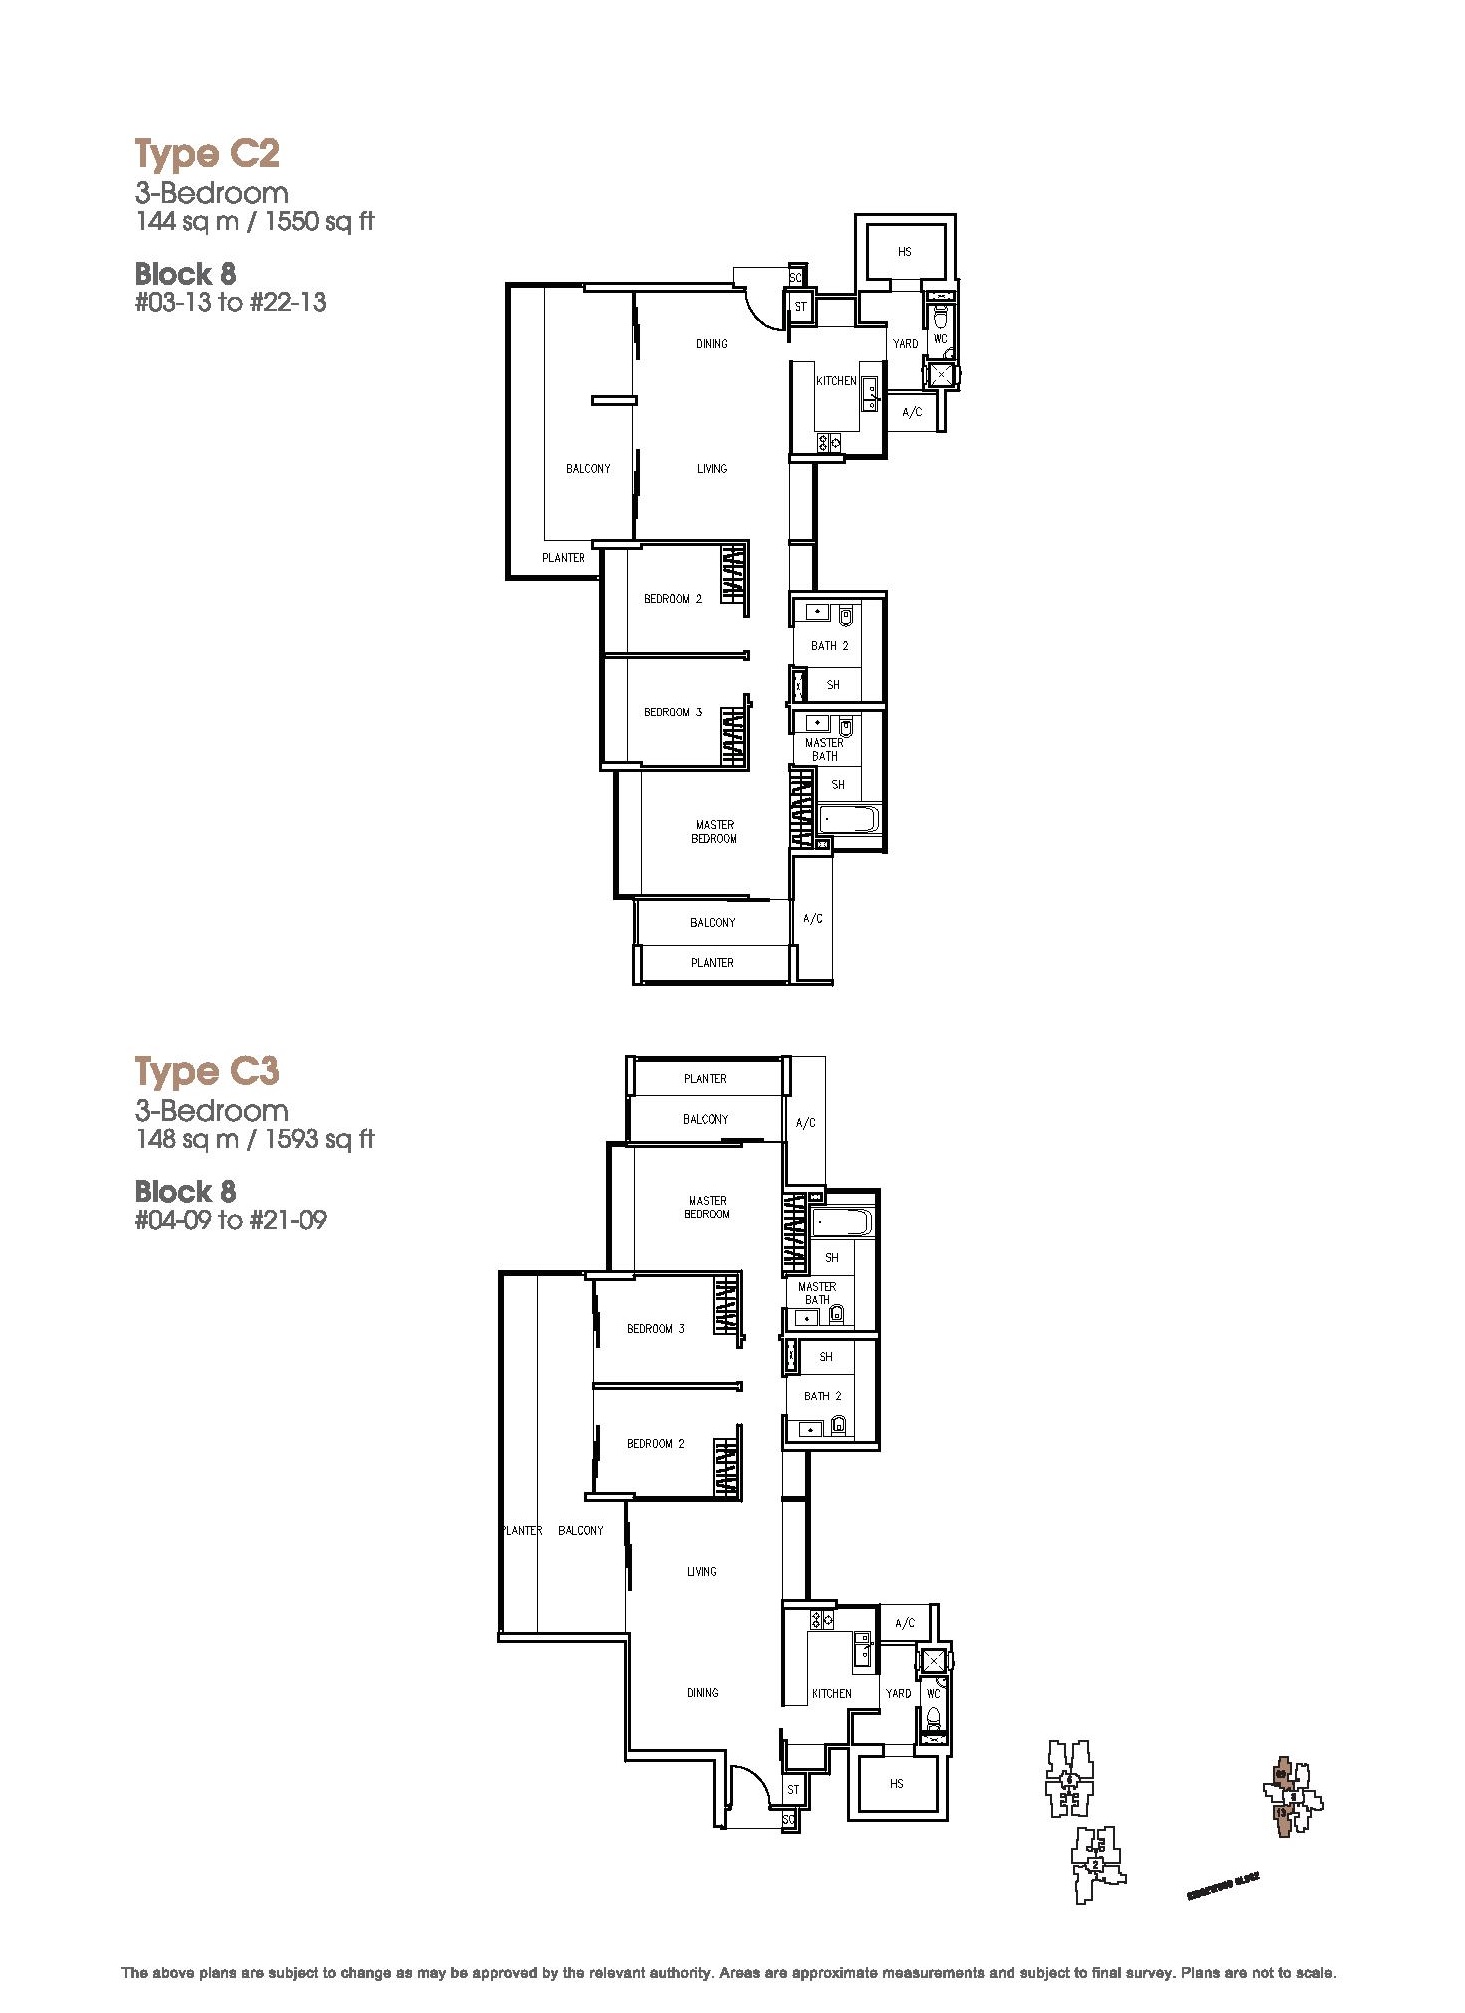 The Trizon 3 Bedroom Floor Plans Type C2 and C3